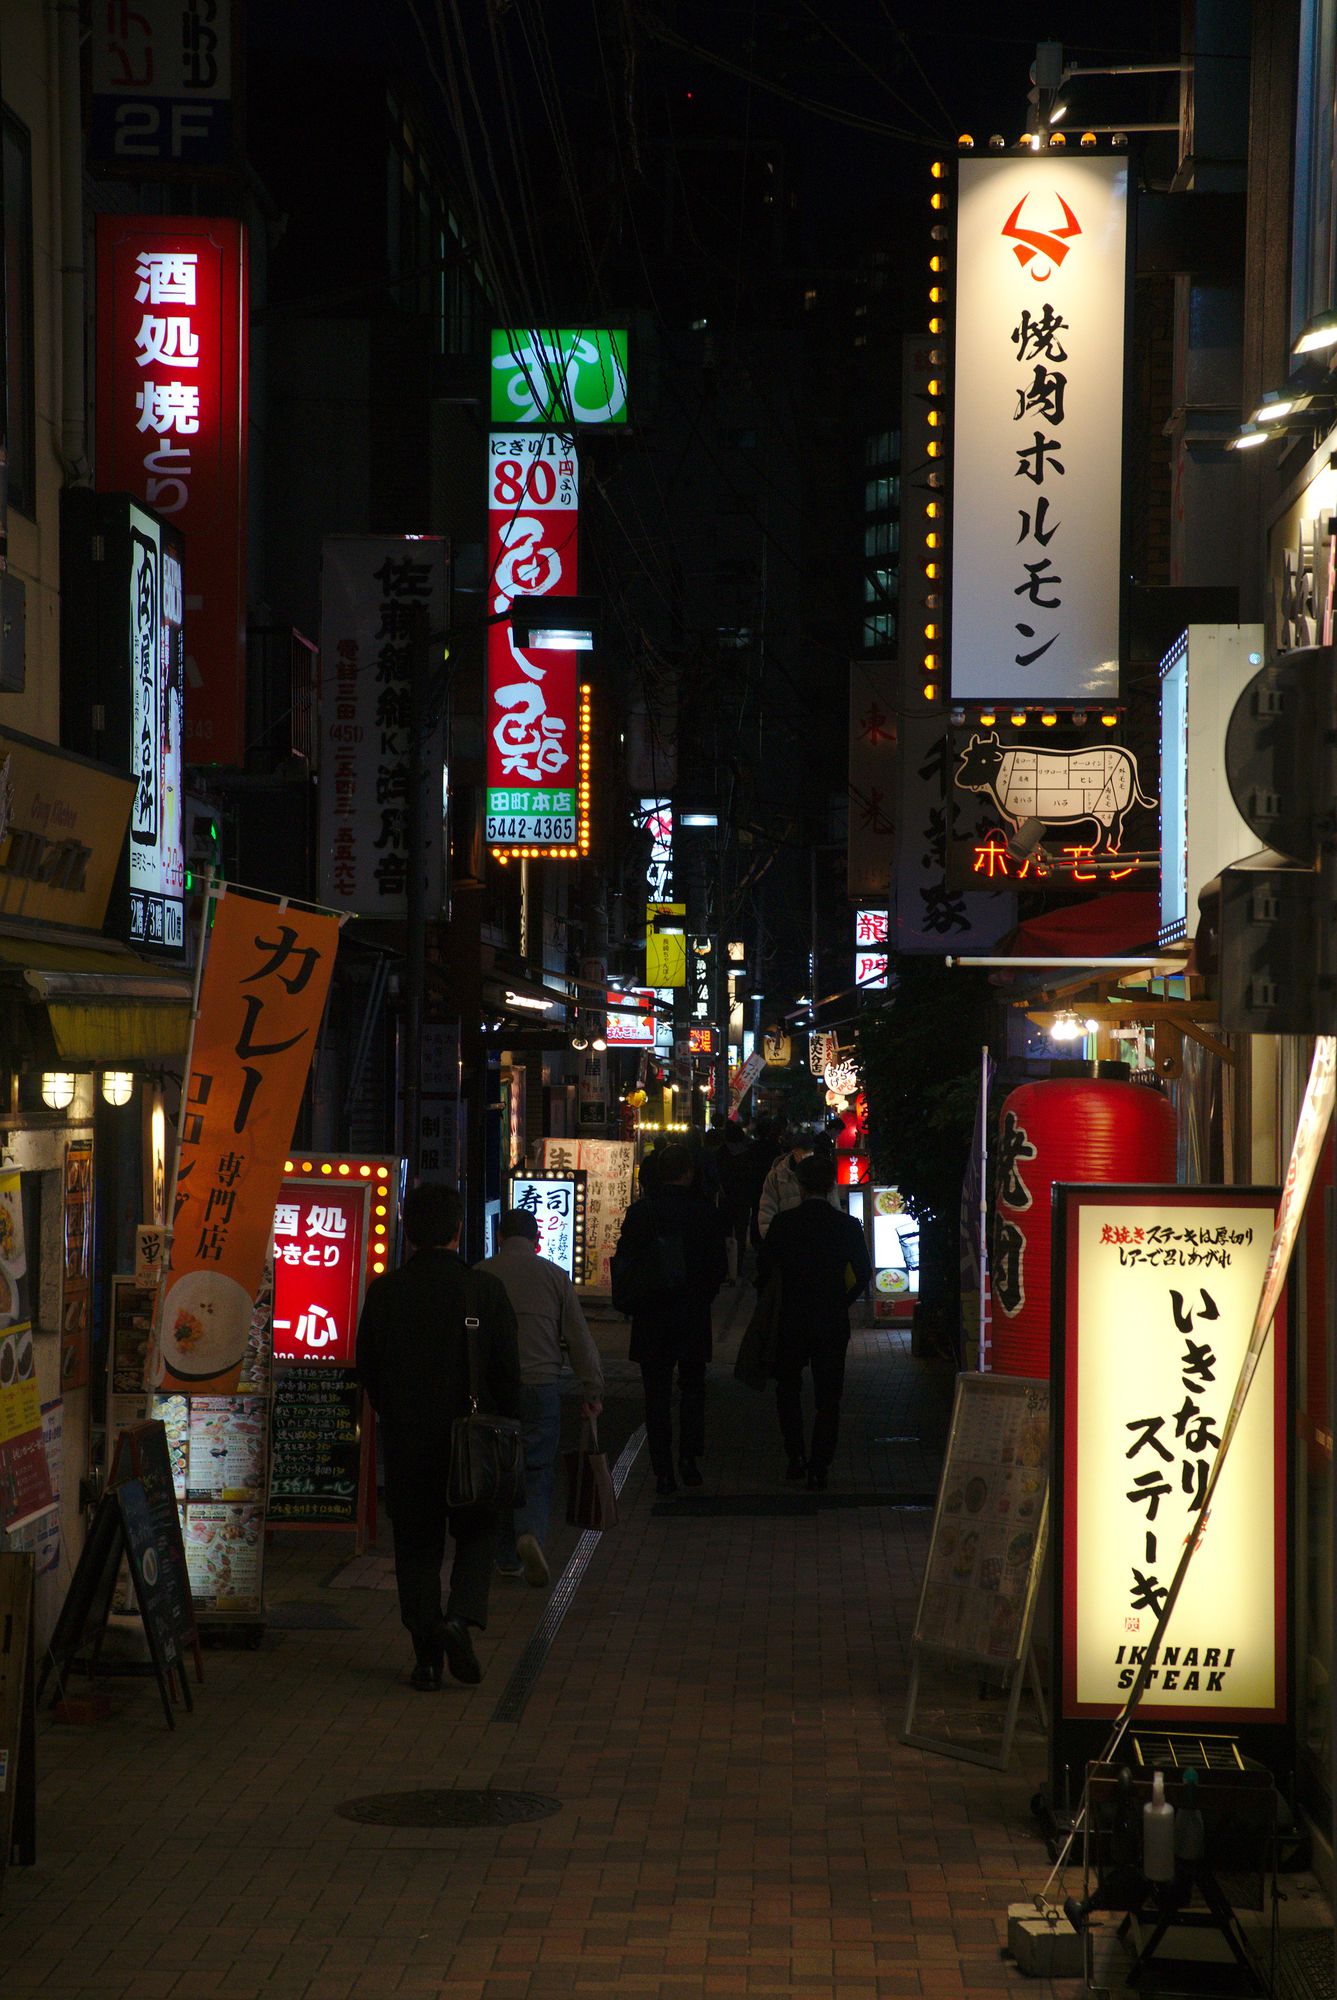 Minato City street signs